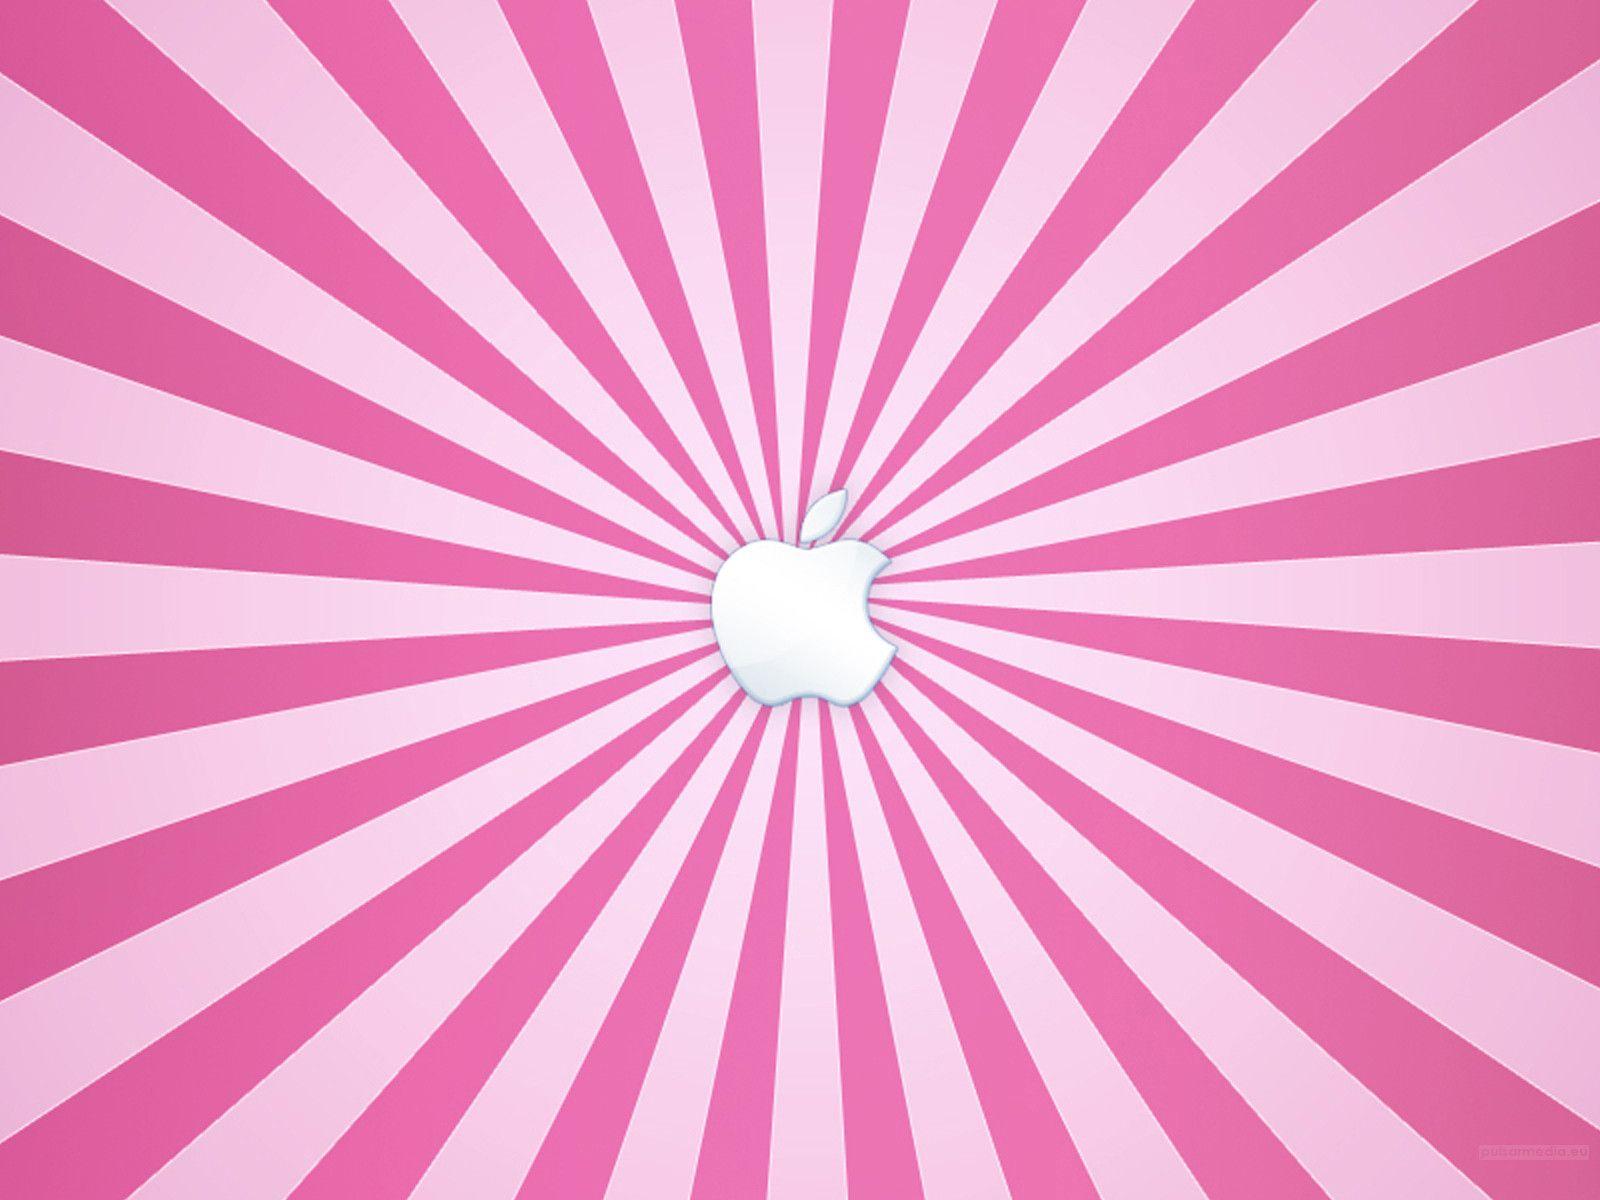 Pink Apple logo Wallpaper. High Quality Wallpaper